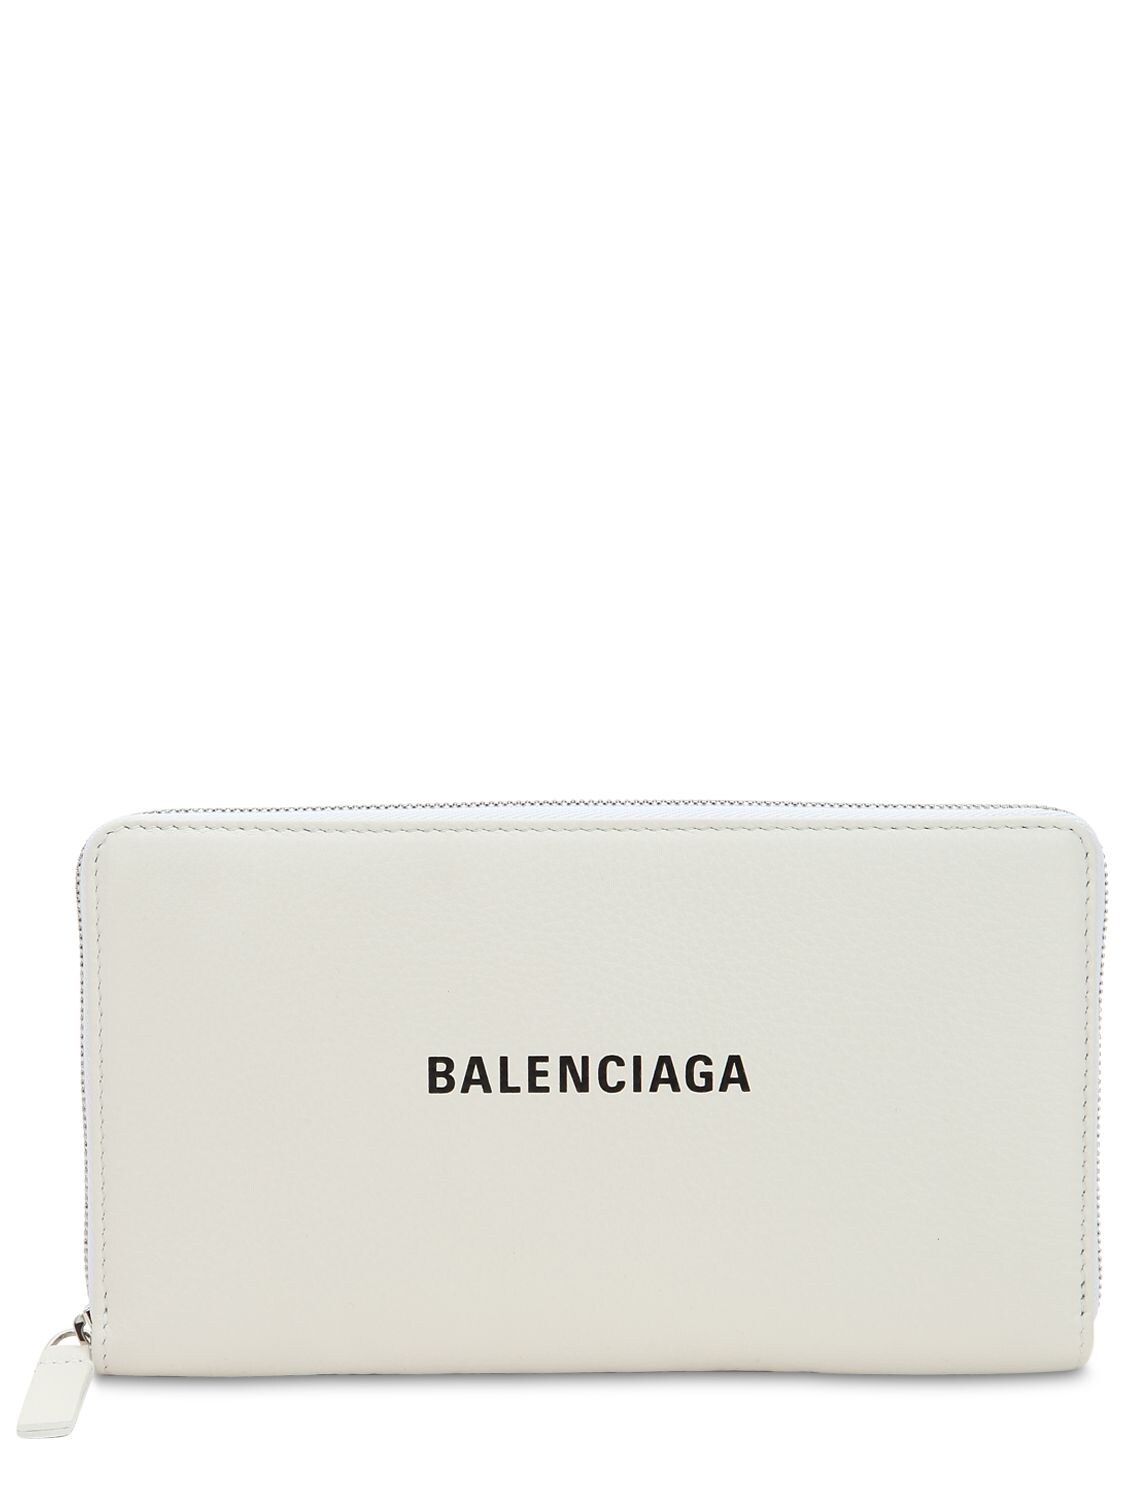 Balenciaga Zip Round Leather Wallet In White